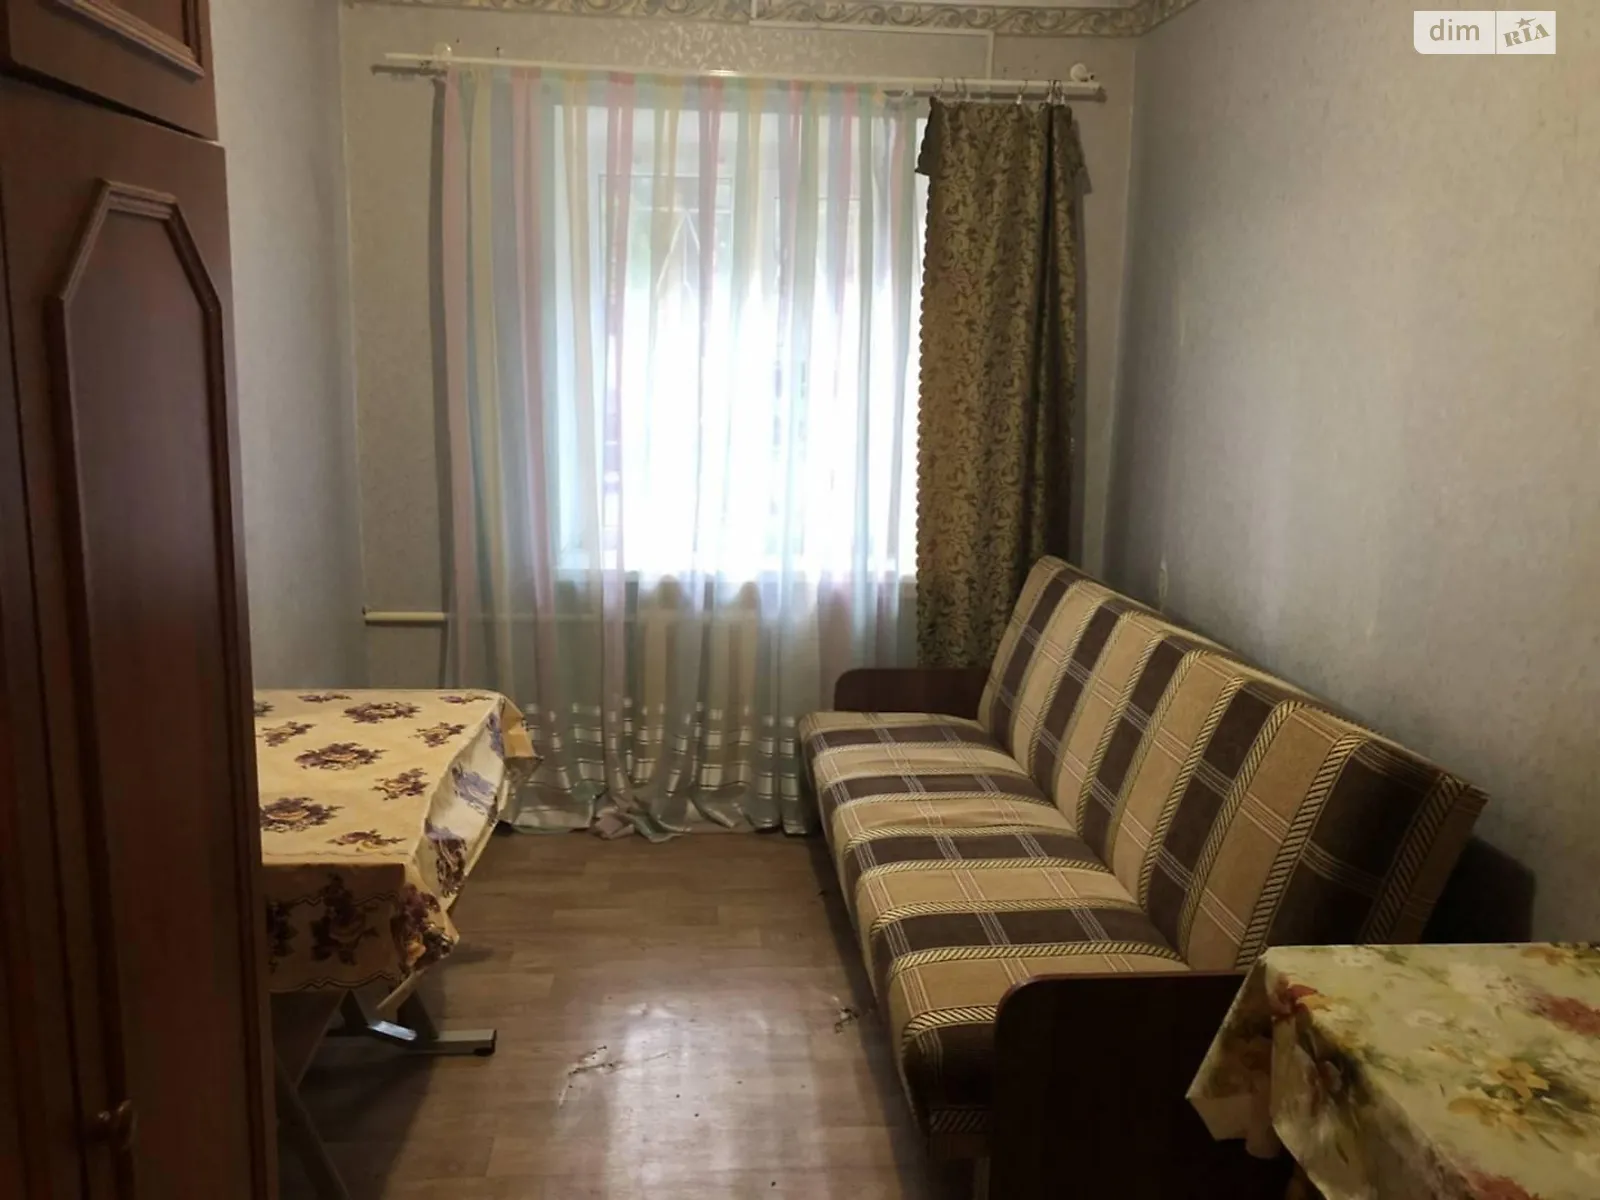 Продается комната 9.4 кв. м в Одессе, цена: 6700 $ - фото 1